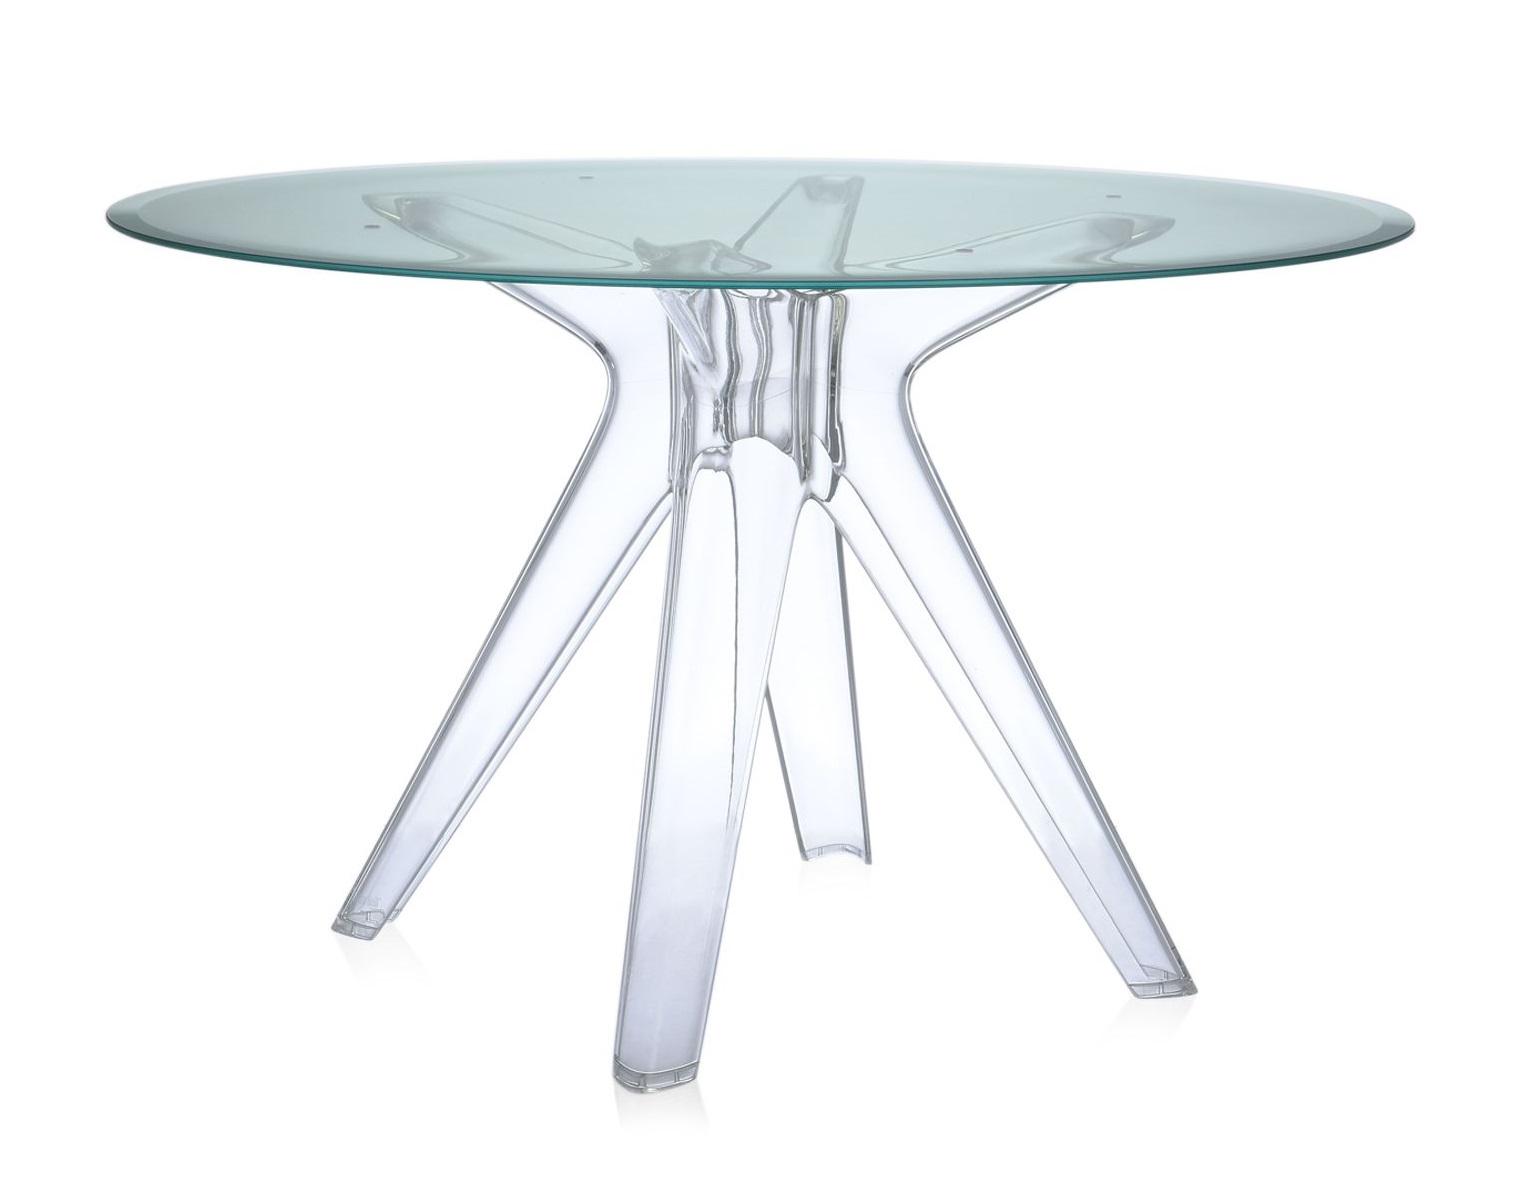 Masa Kartell Sir Gio design Philippe Starck diametru 120cm verde – transparent 120cm